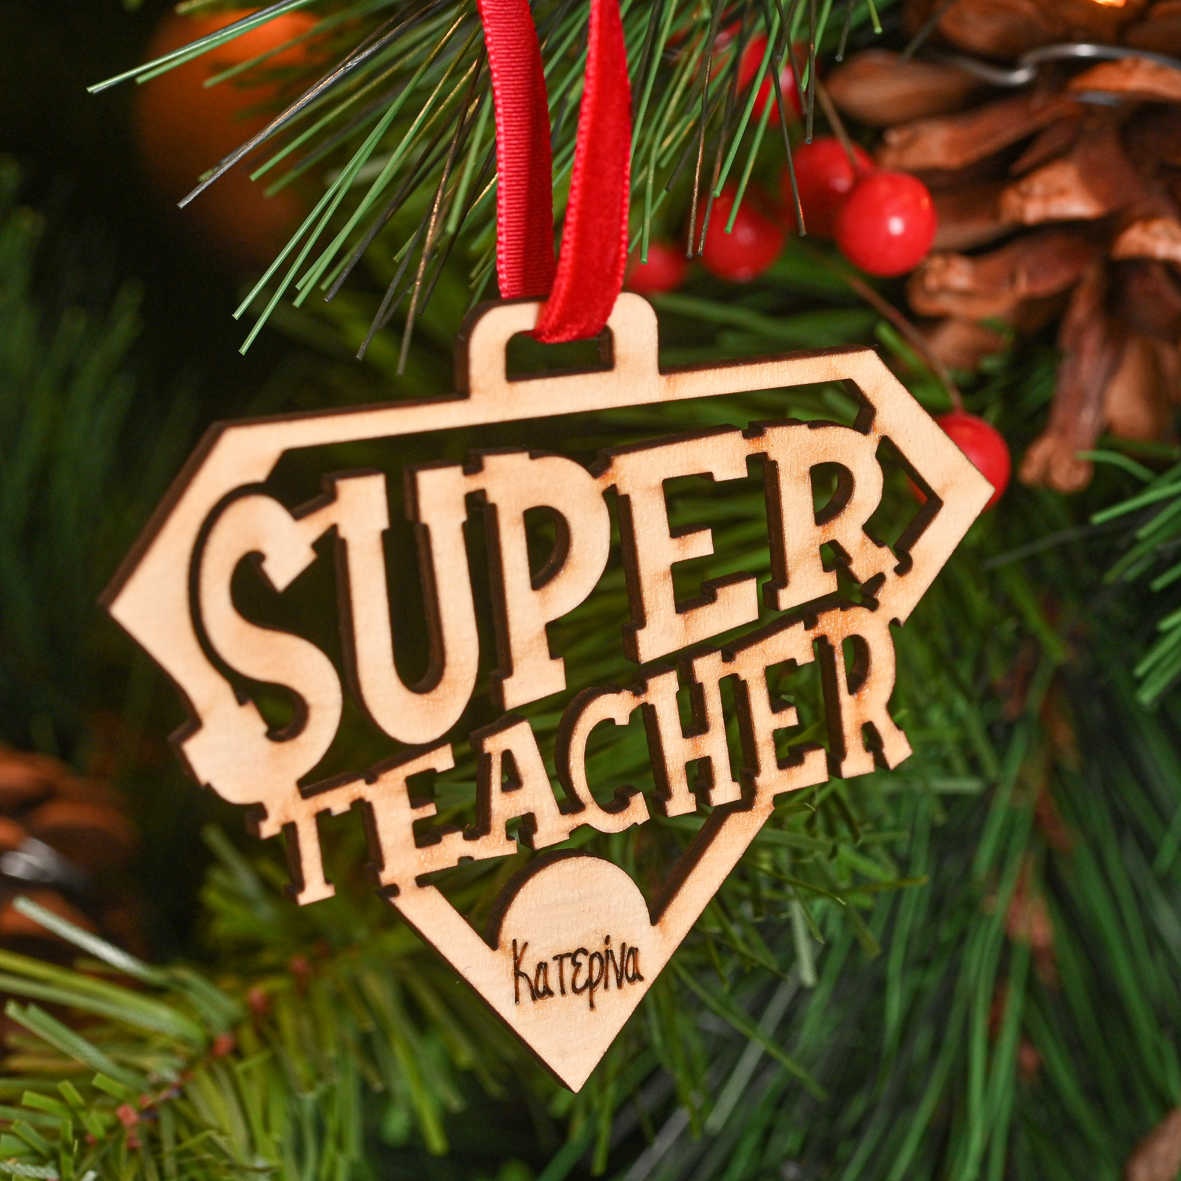 Super Teacher - Ξύλινο Στολίδι